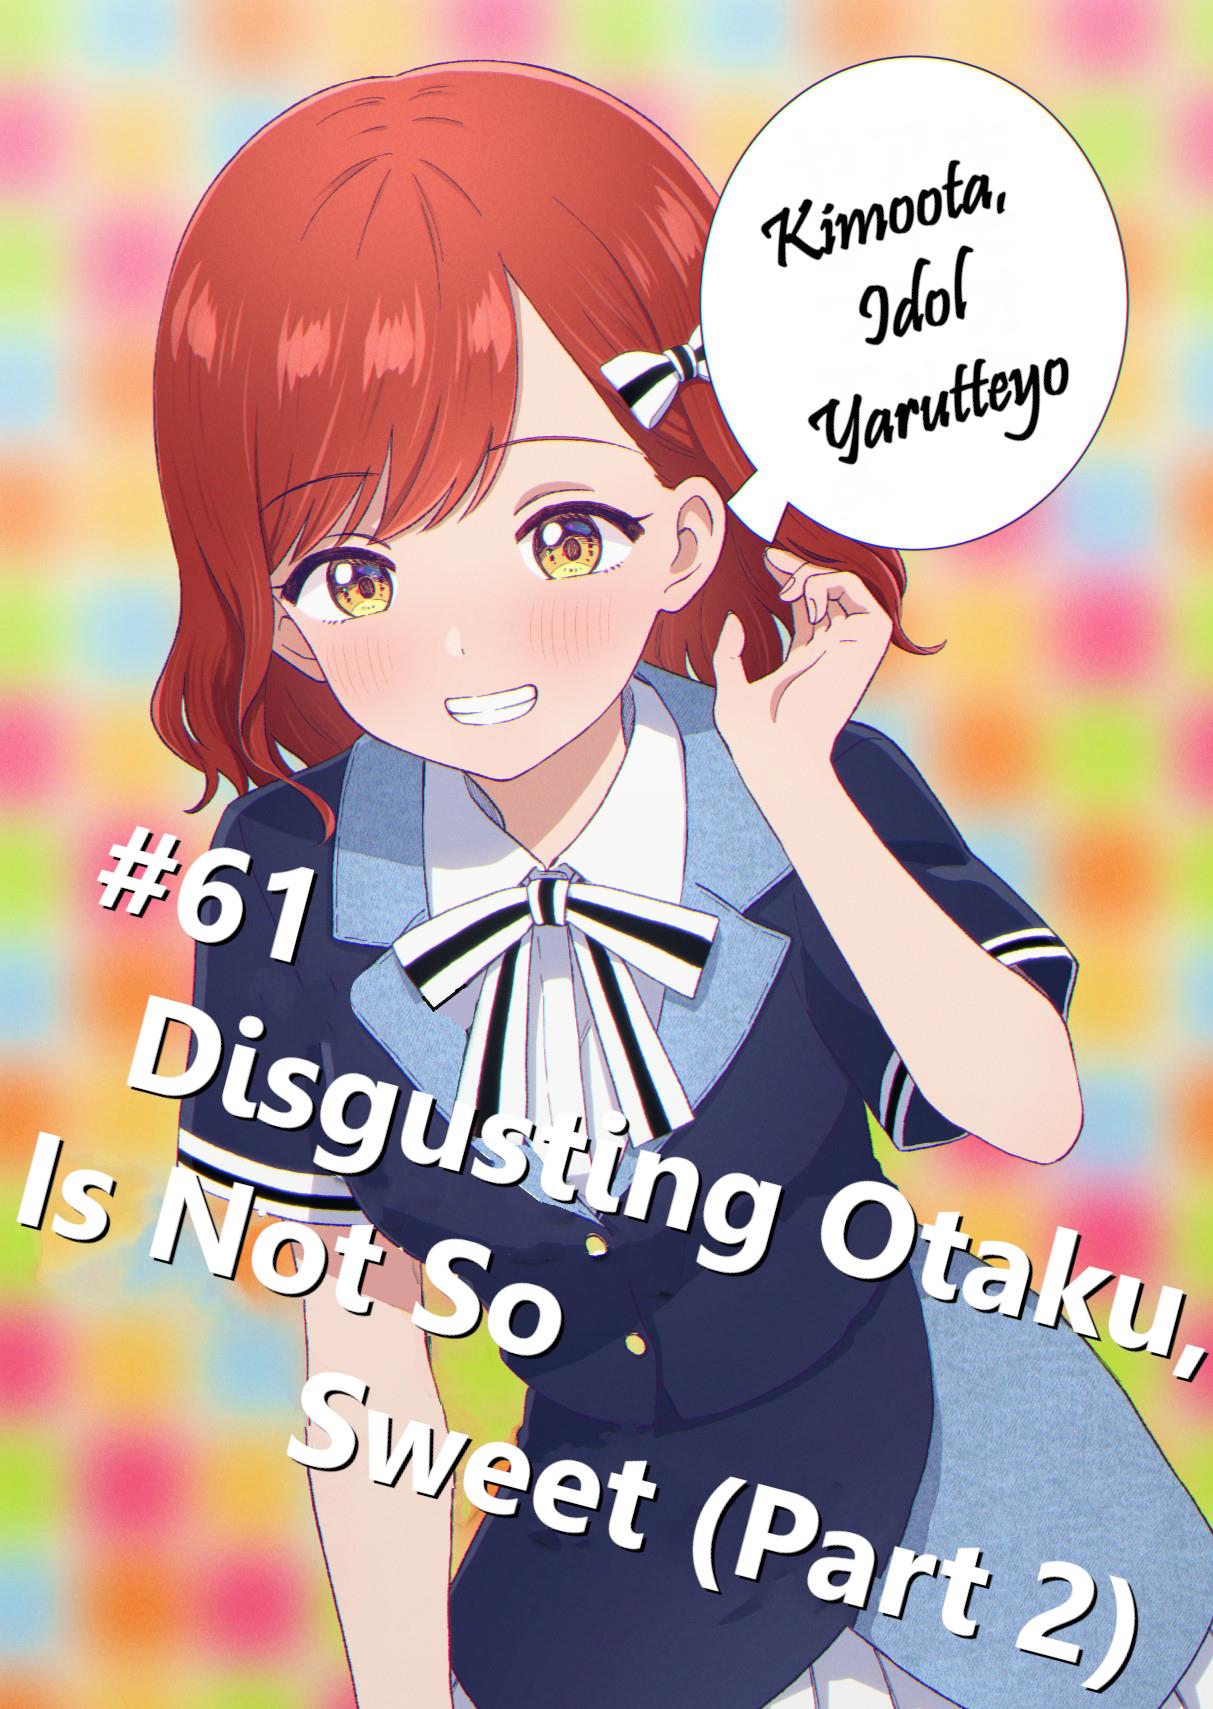 Kimoota, Idol Yarutteyo Vol.11 Chapter 61: Disgusting Otaku, Is Not So Sweet (Part 2) - Picture 1